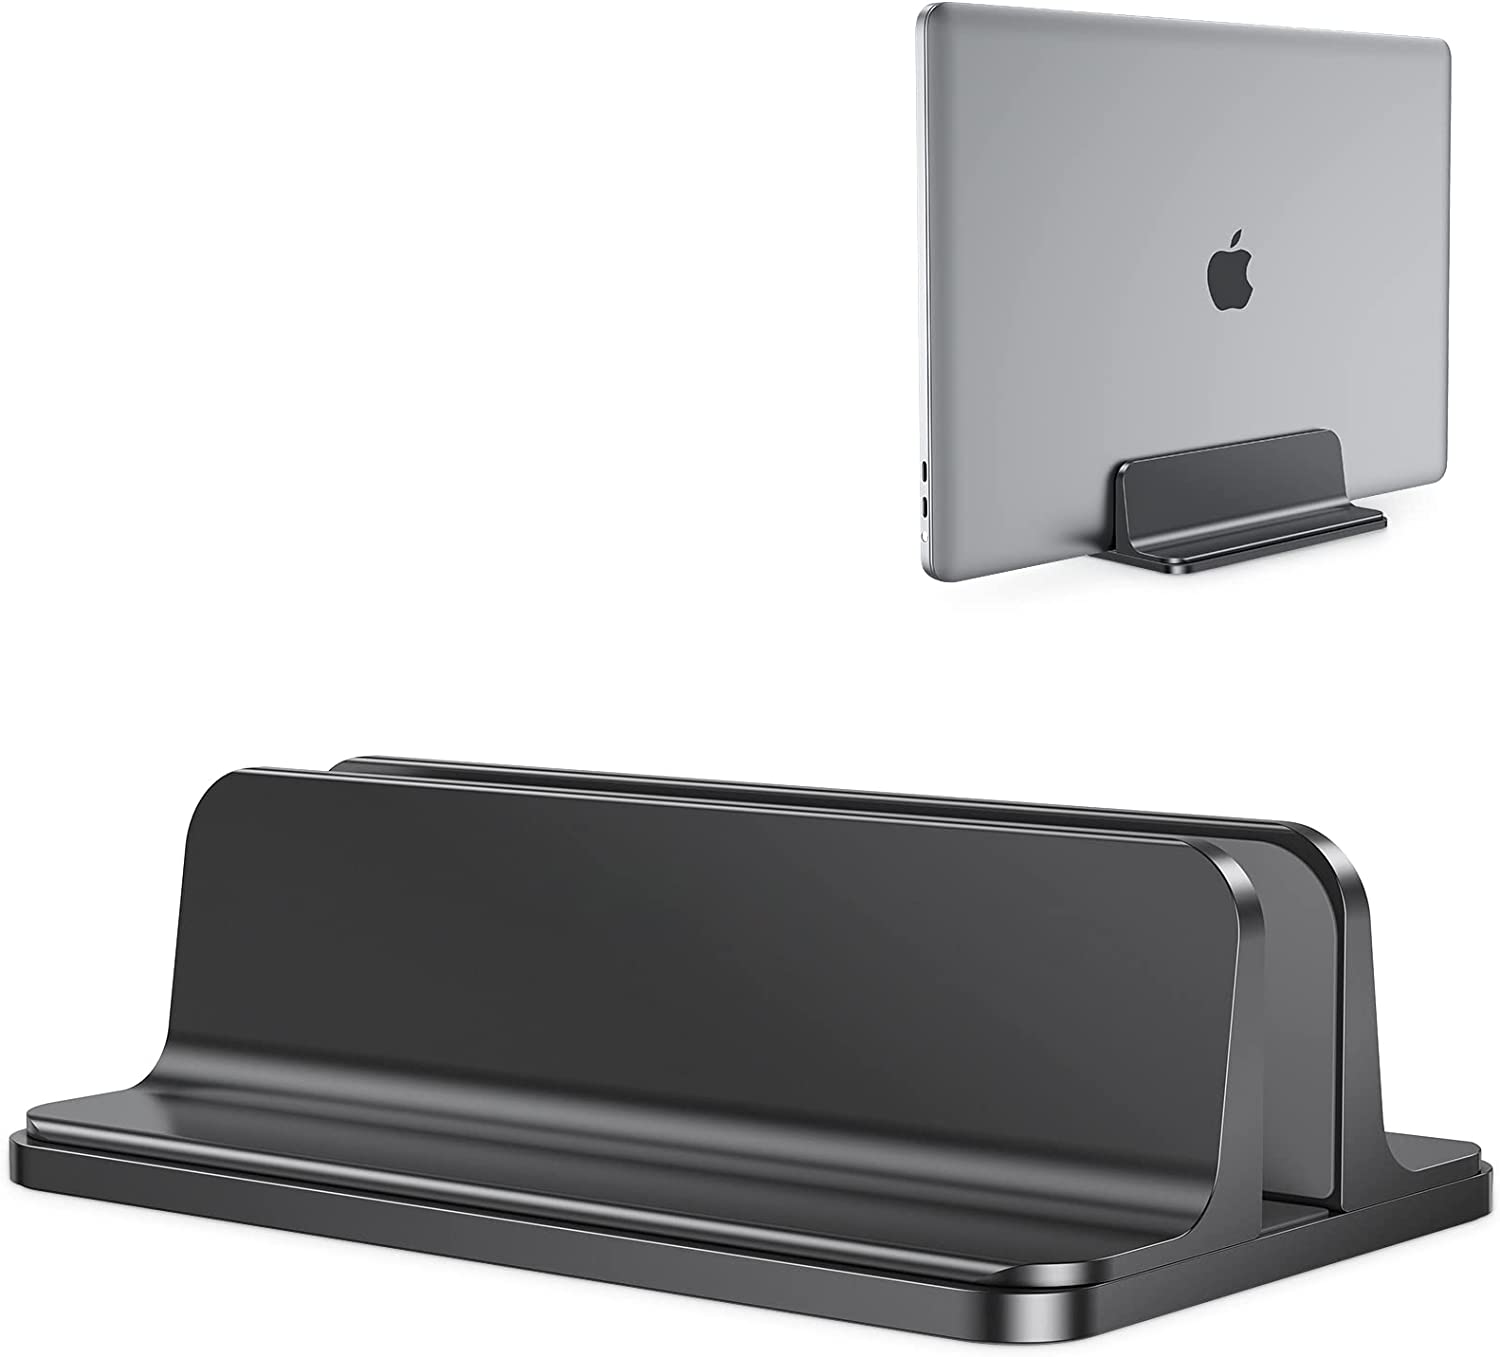 OMOTON Desktop Vertical Aluminum Stand